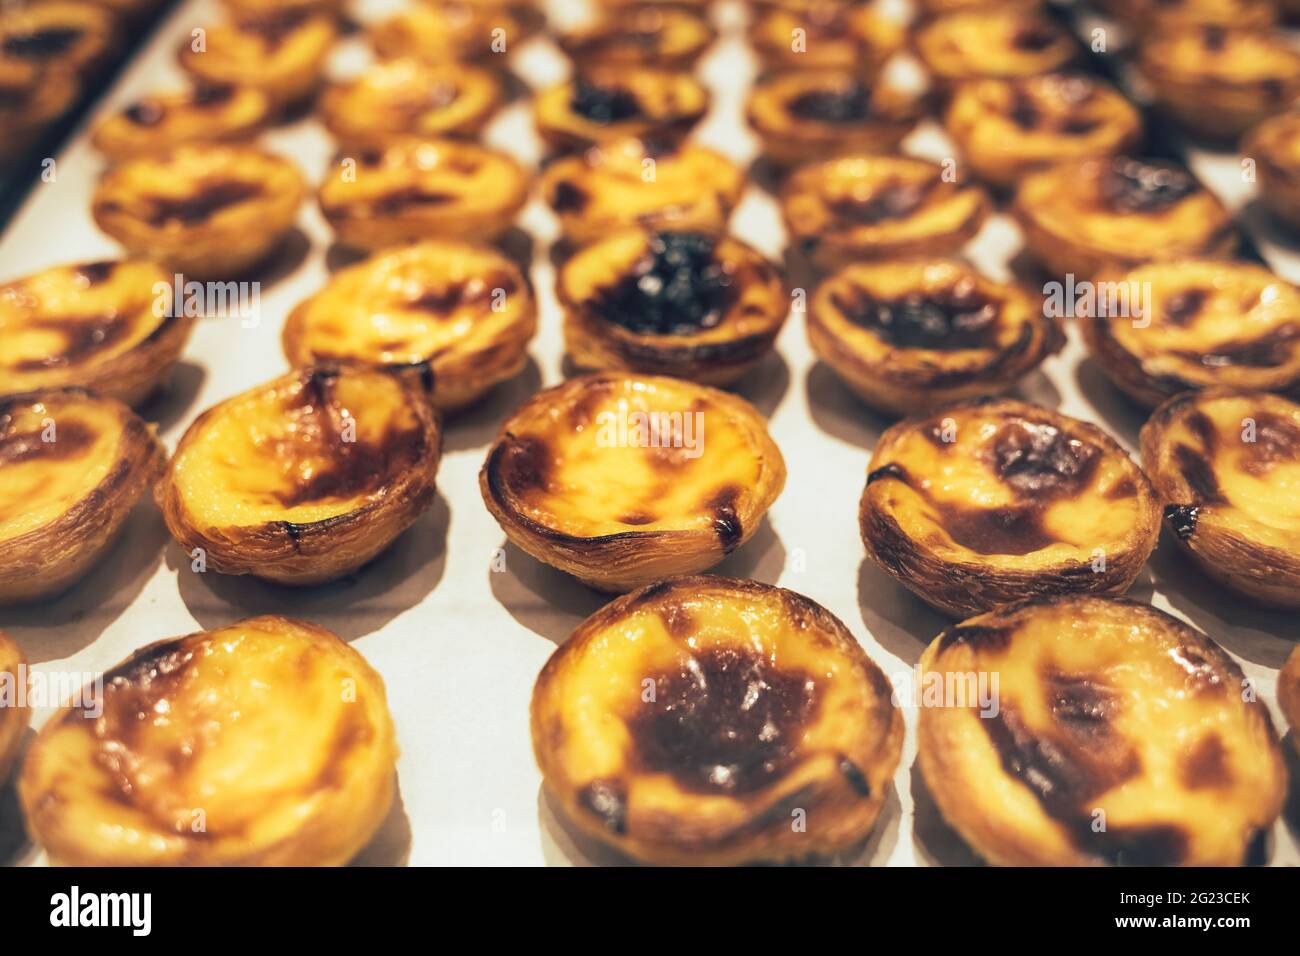 Traditional Portuguese dessert - Pastel de nata on bakery shelve. Stock Photo